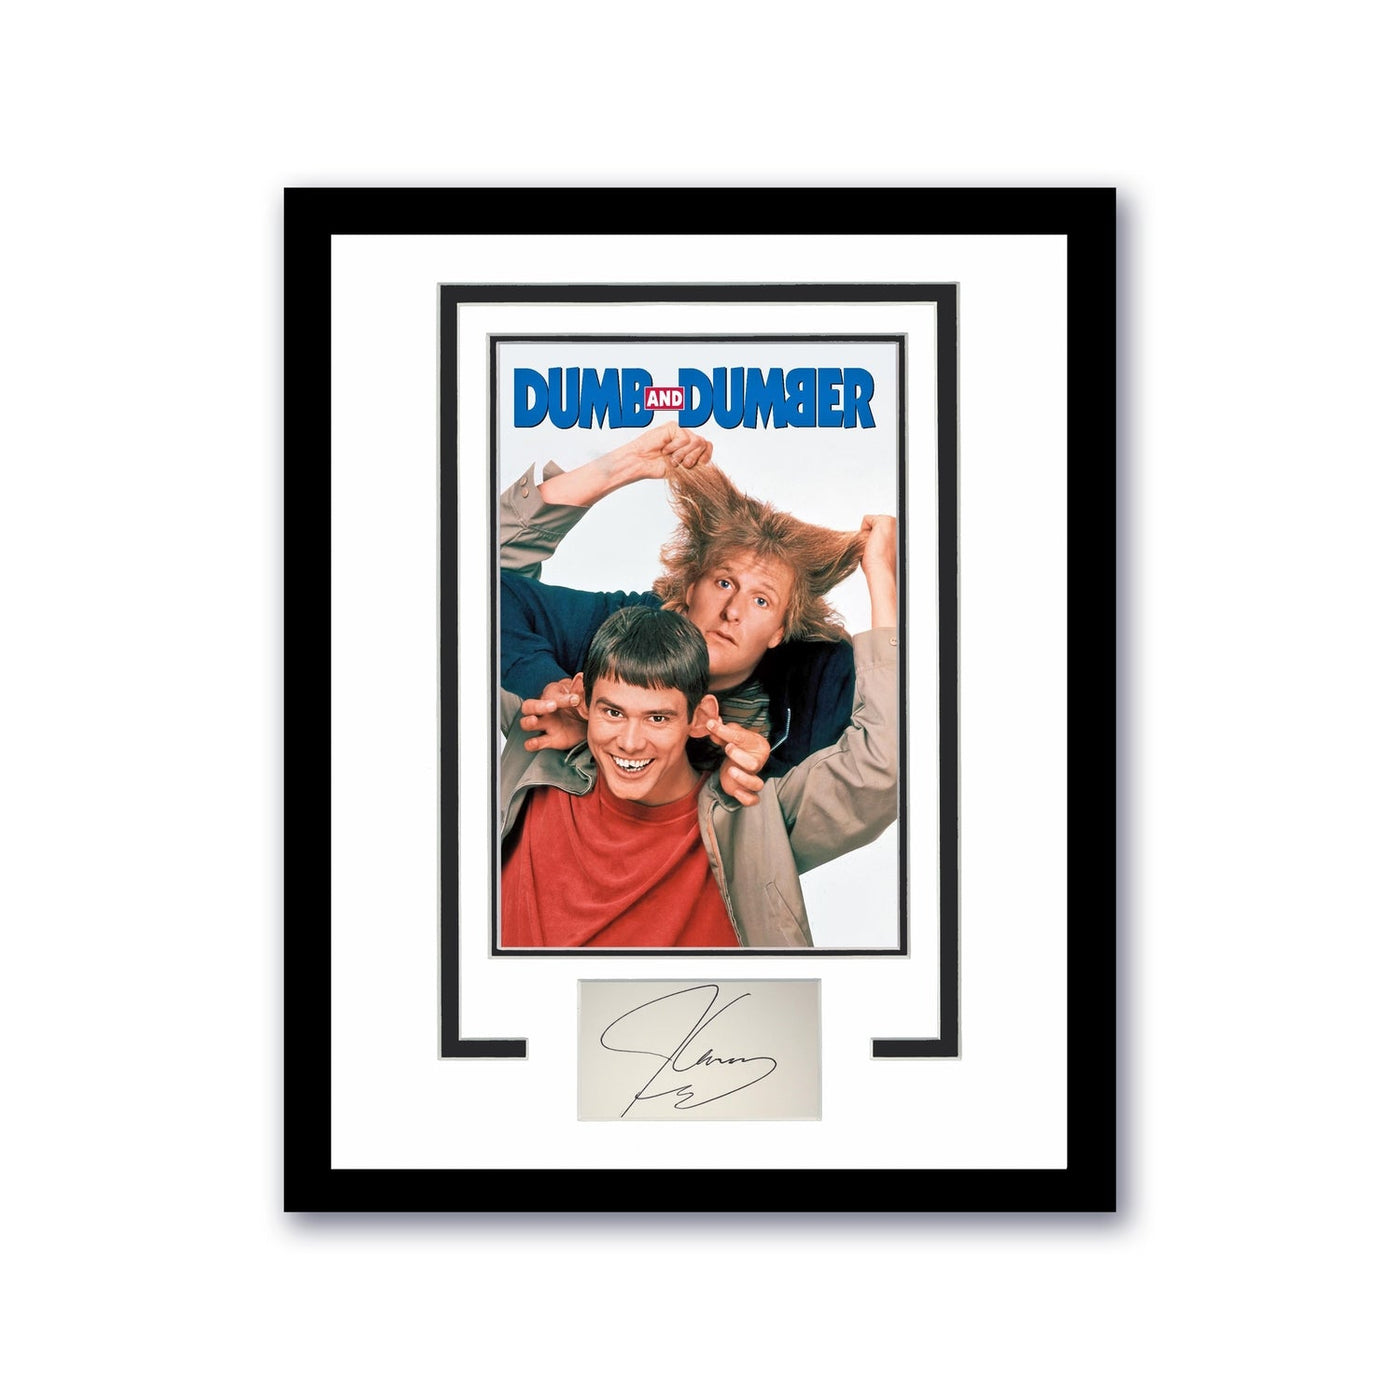 Dumb & Dumber Jim Carrey Autographed Signed 11x14 Framed Poster Photo ACOA